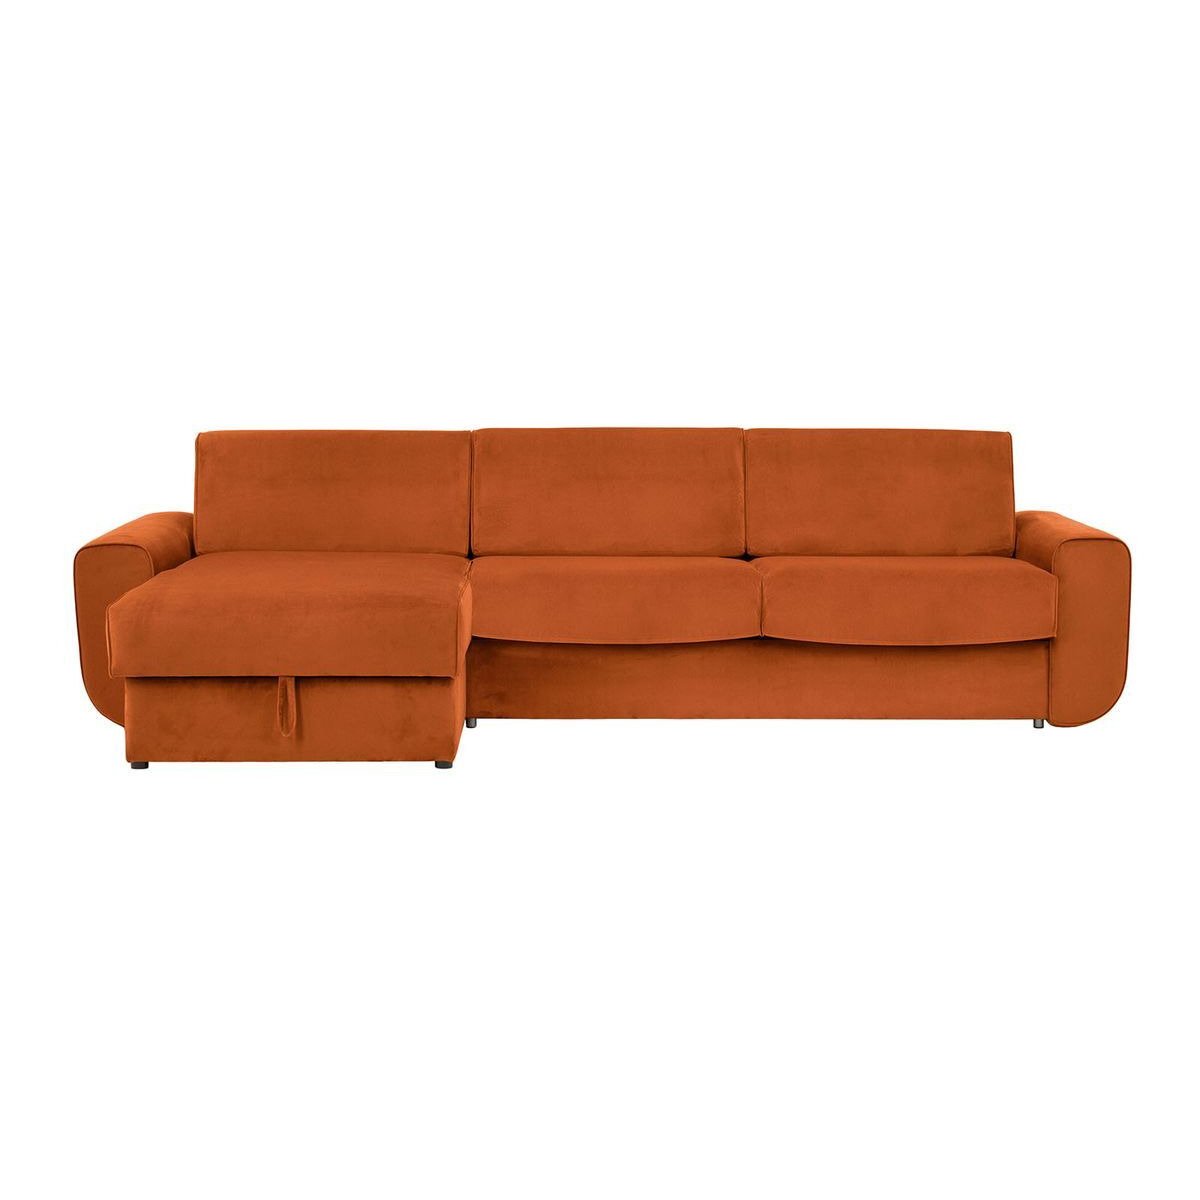 Salsa corner sofa bed with storage, boucle brown - image 1